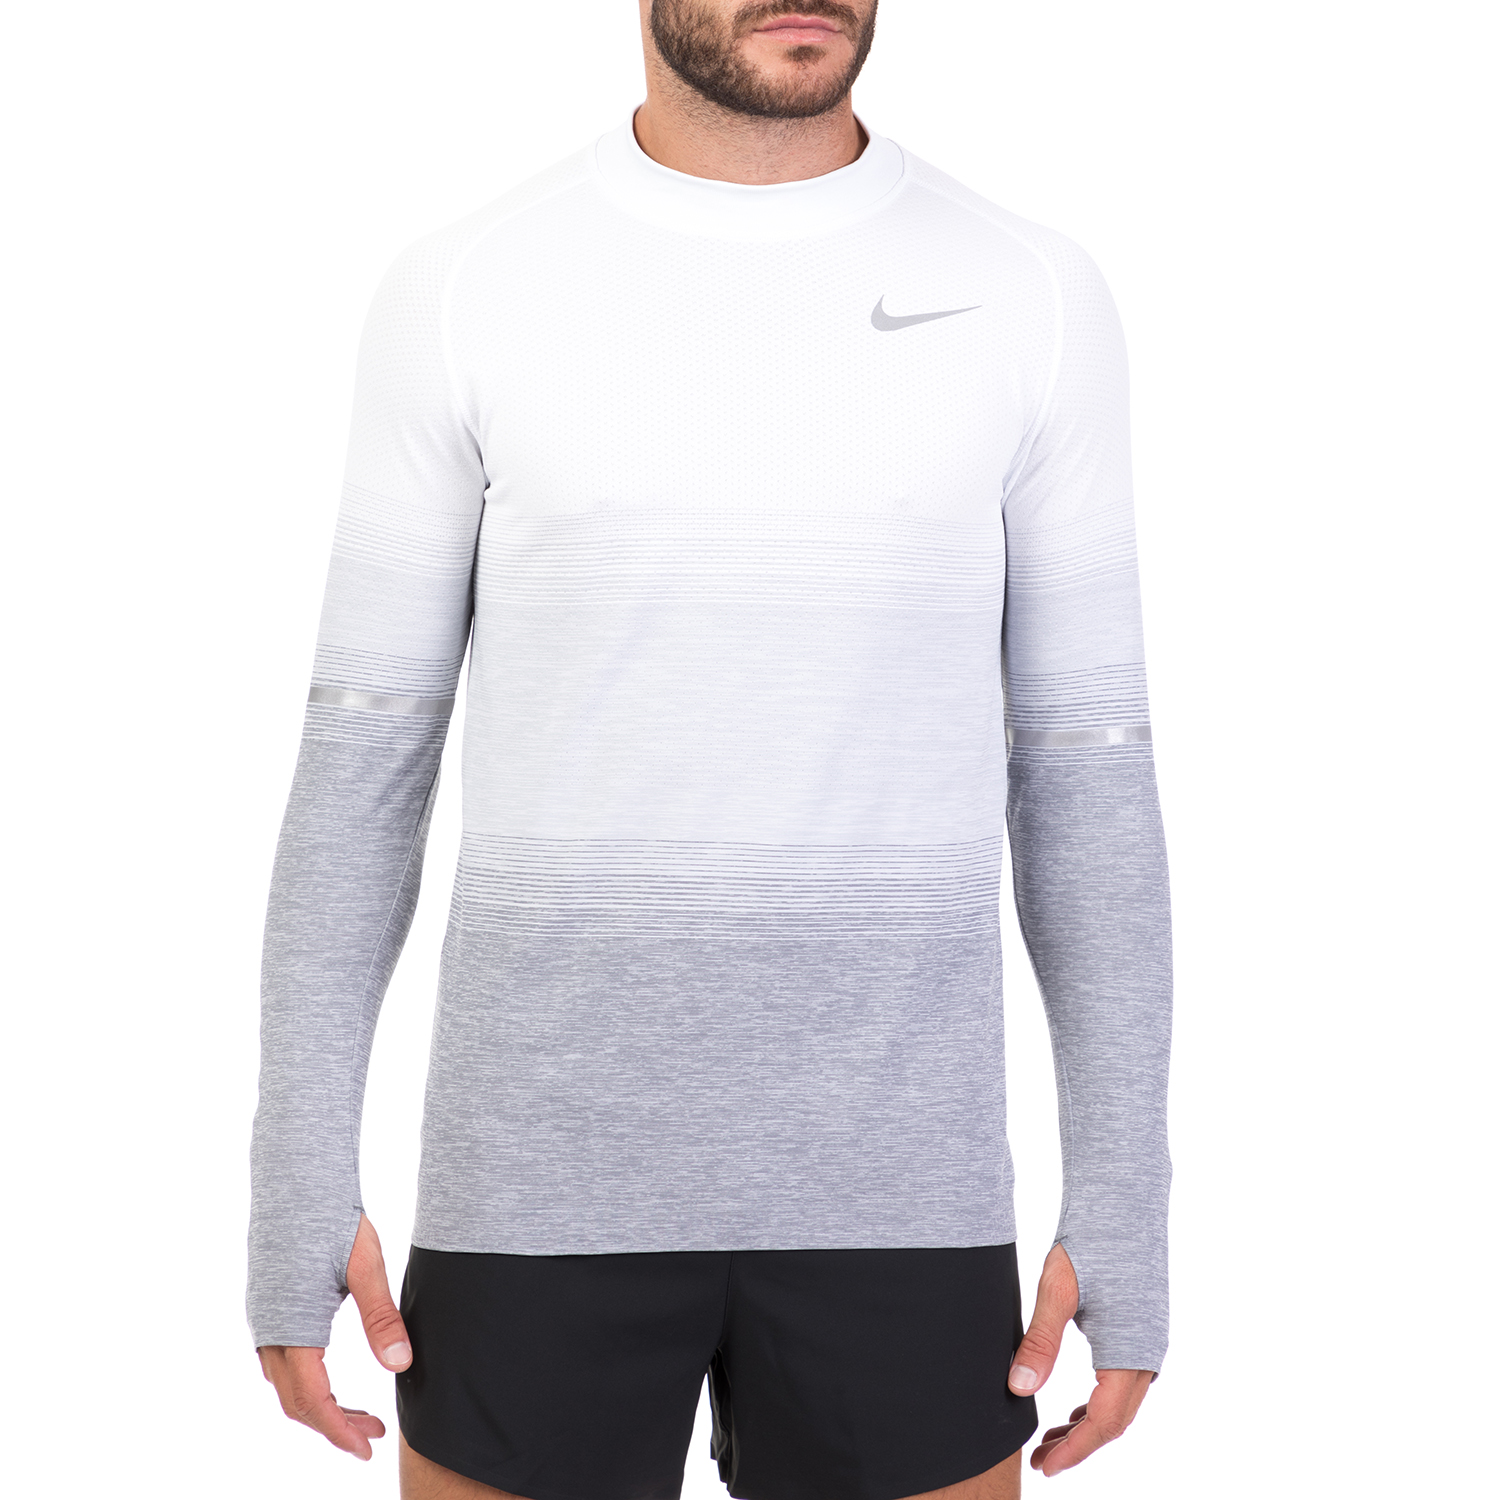 NIKE - Ανδρική αθλητική μακρυμάνικη μπλούζα Nike DF KNIT TOP LS MOCK γκρι-ασημί Ανδρικά/Ρούχα/Αθλητικά/Φούτερ-Μακρυμάνικα